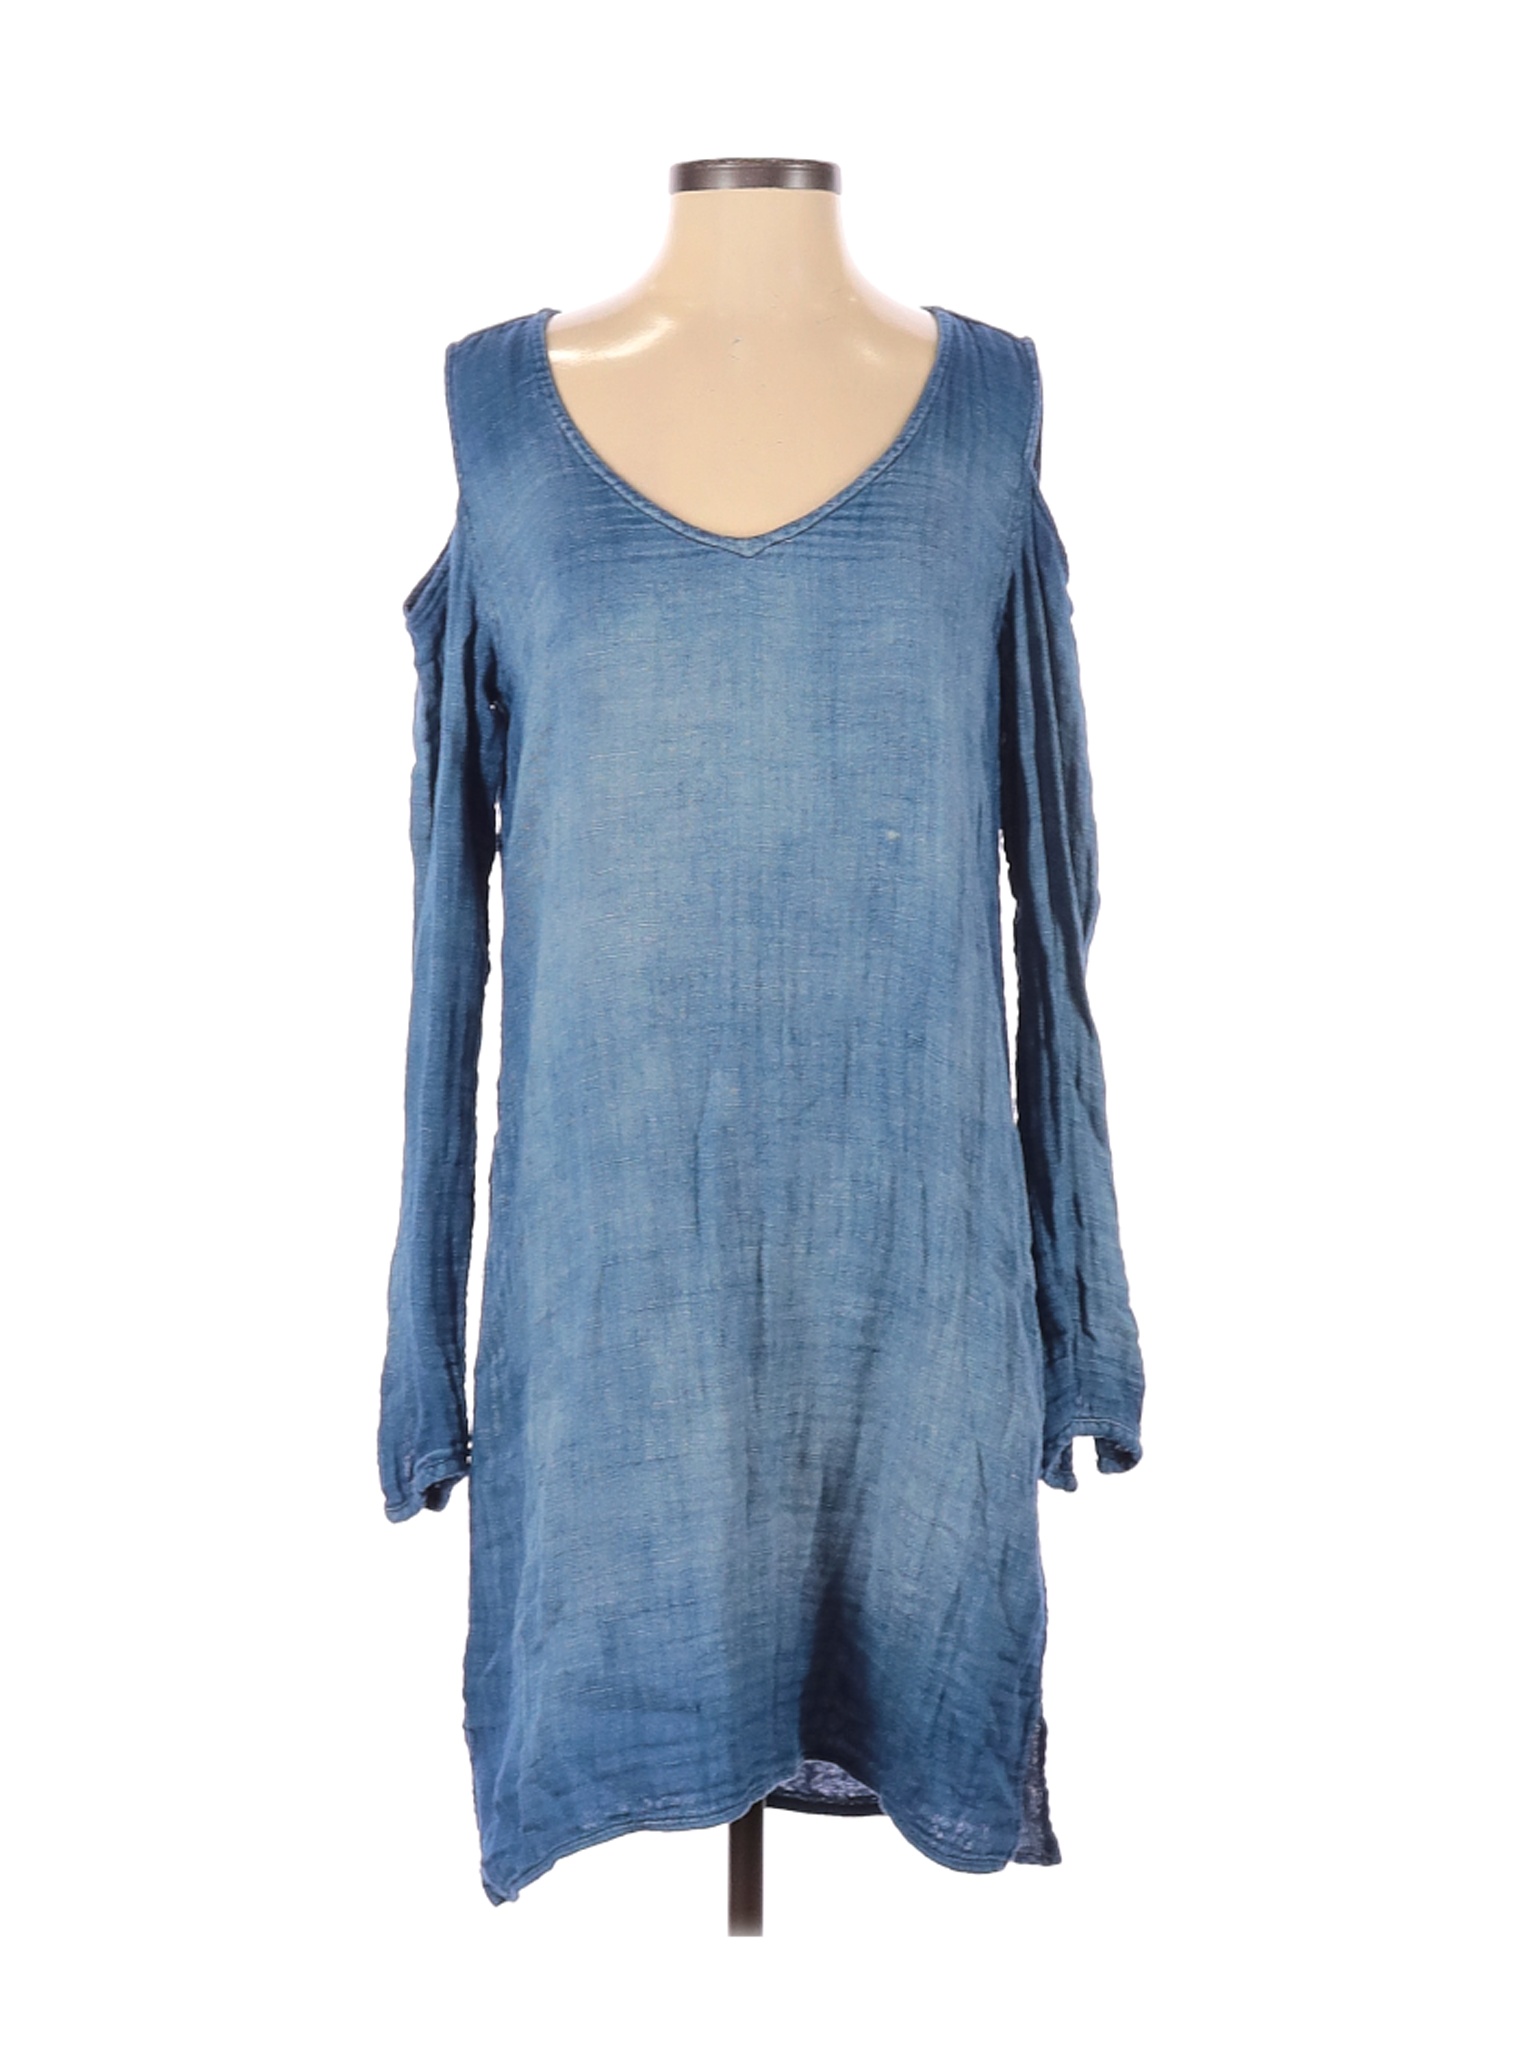 Cloth & Stone Women Blue Casual Dress S | eBay